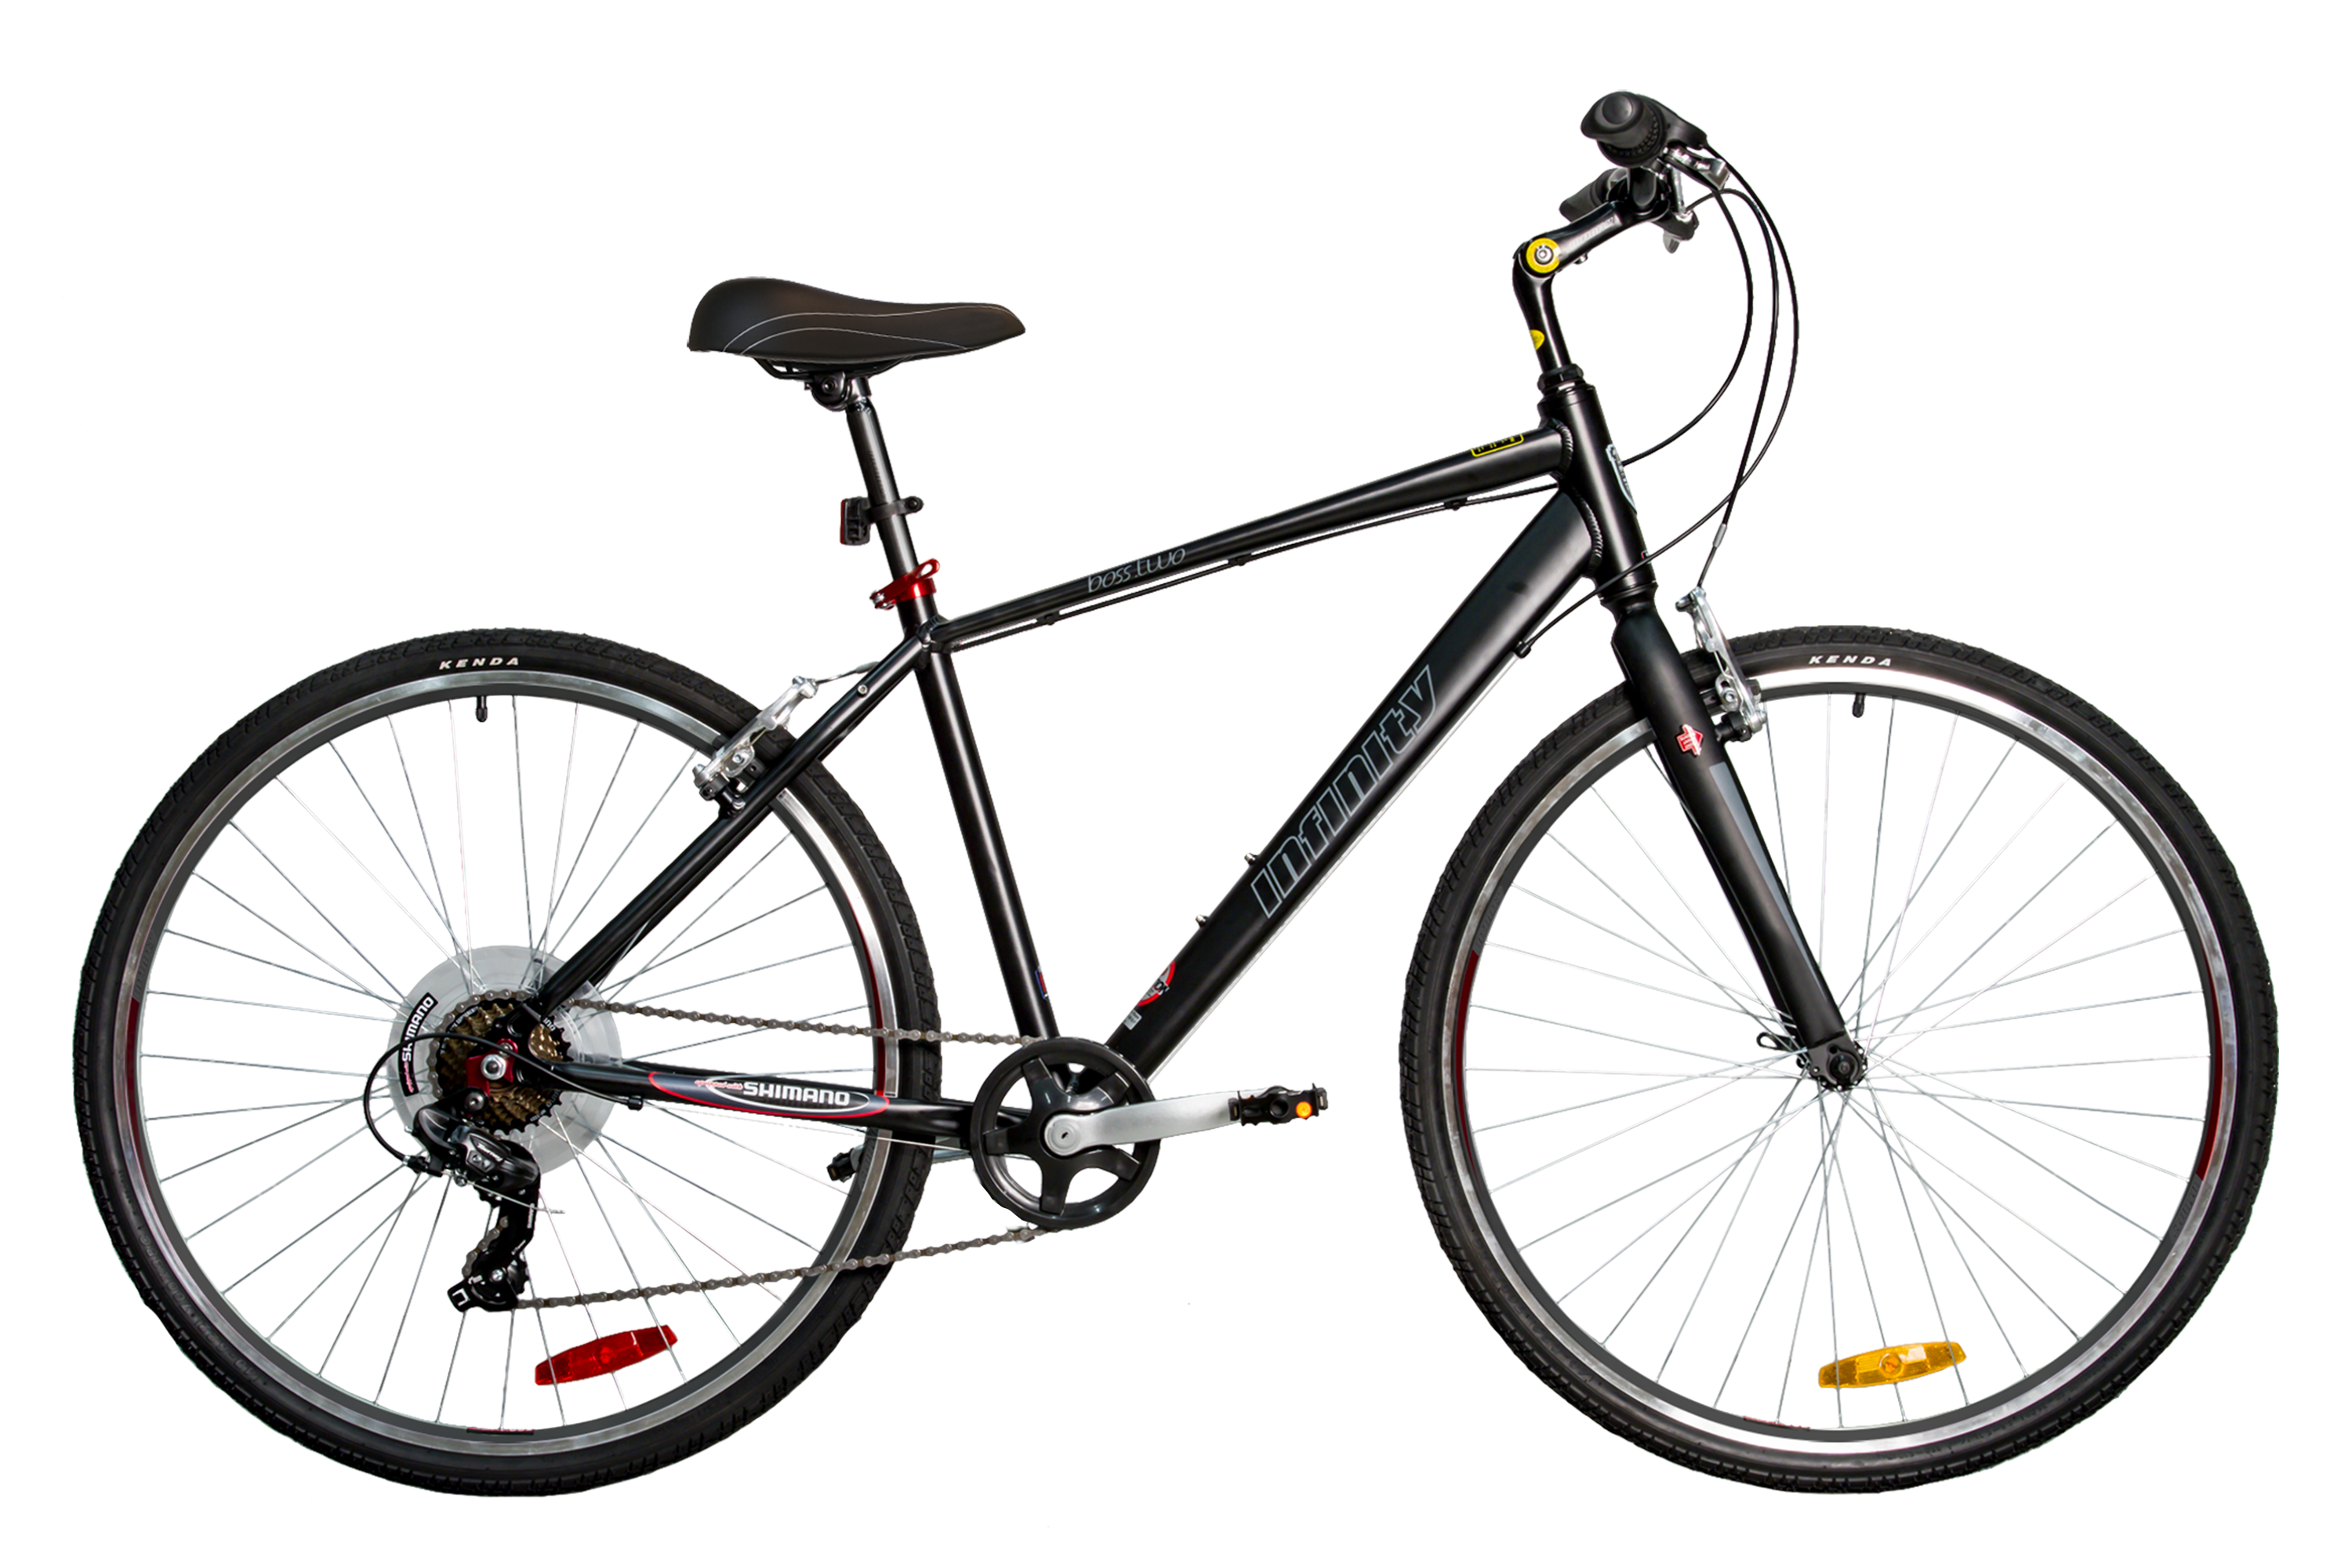 infinity hybrid bike costco